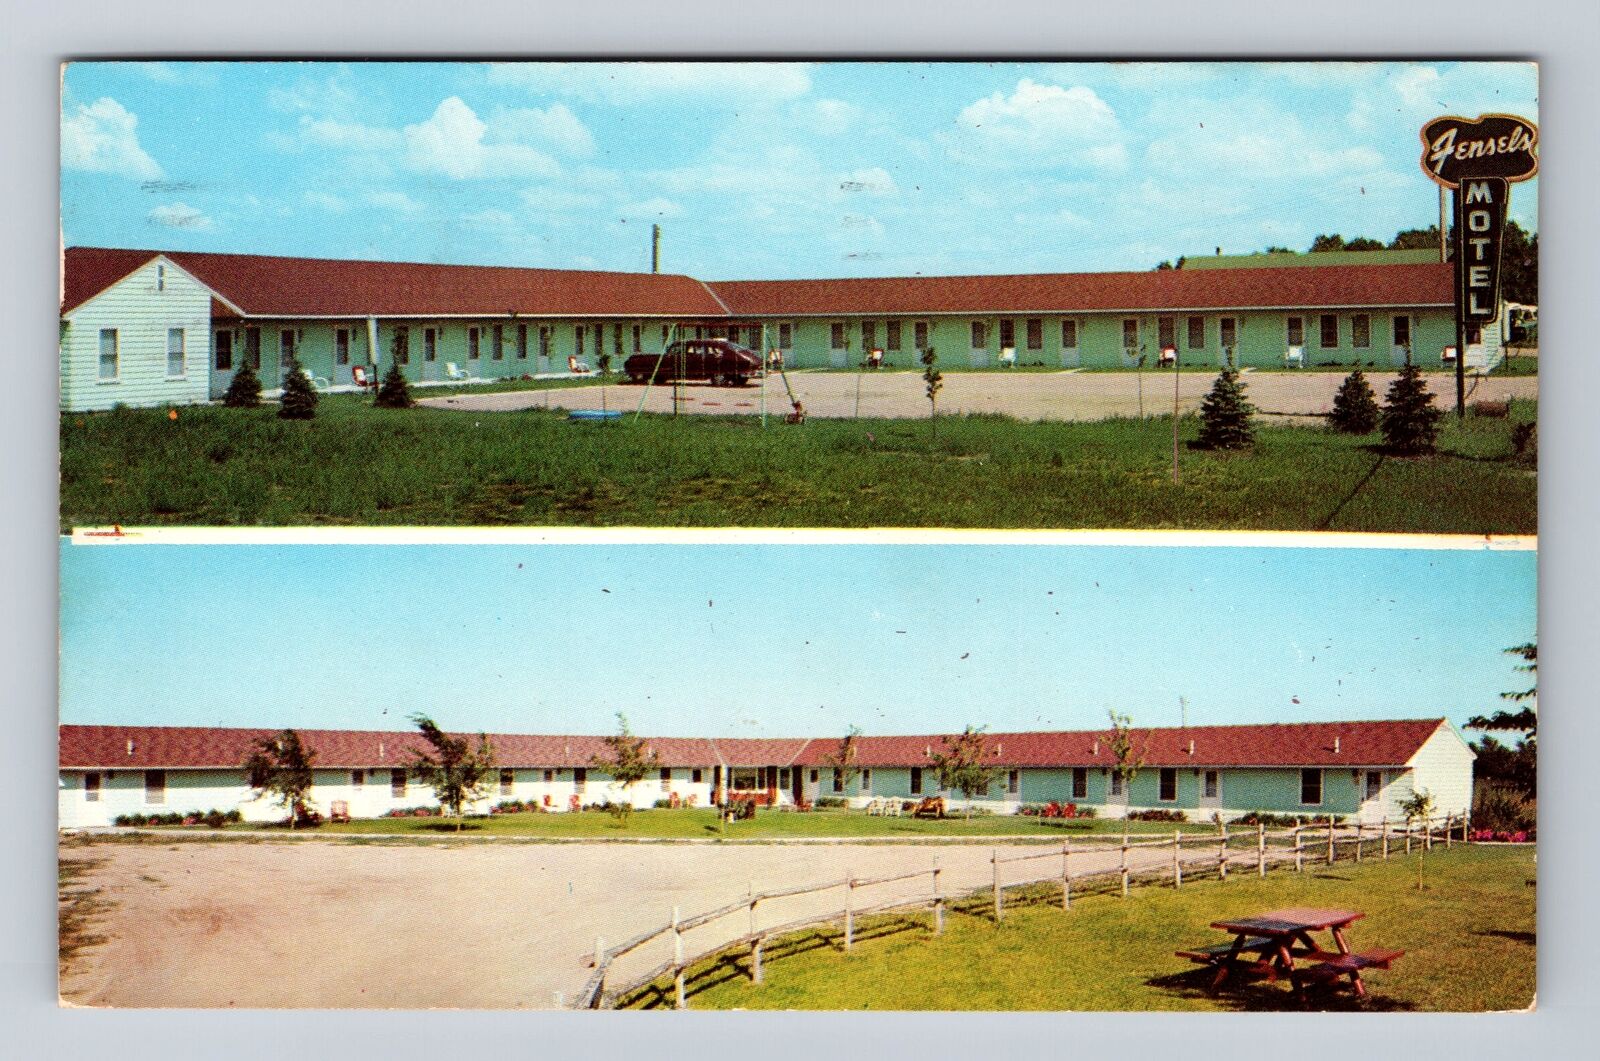 Yankton SD-South Dakota, Fensel's Motels, Advertising, Vintage c1956 Postcard